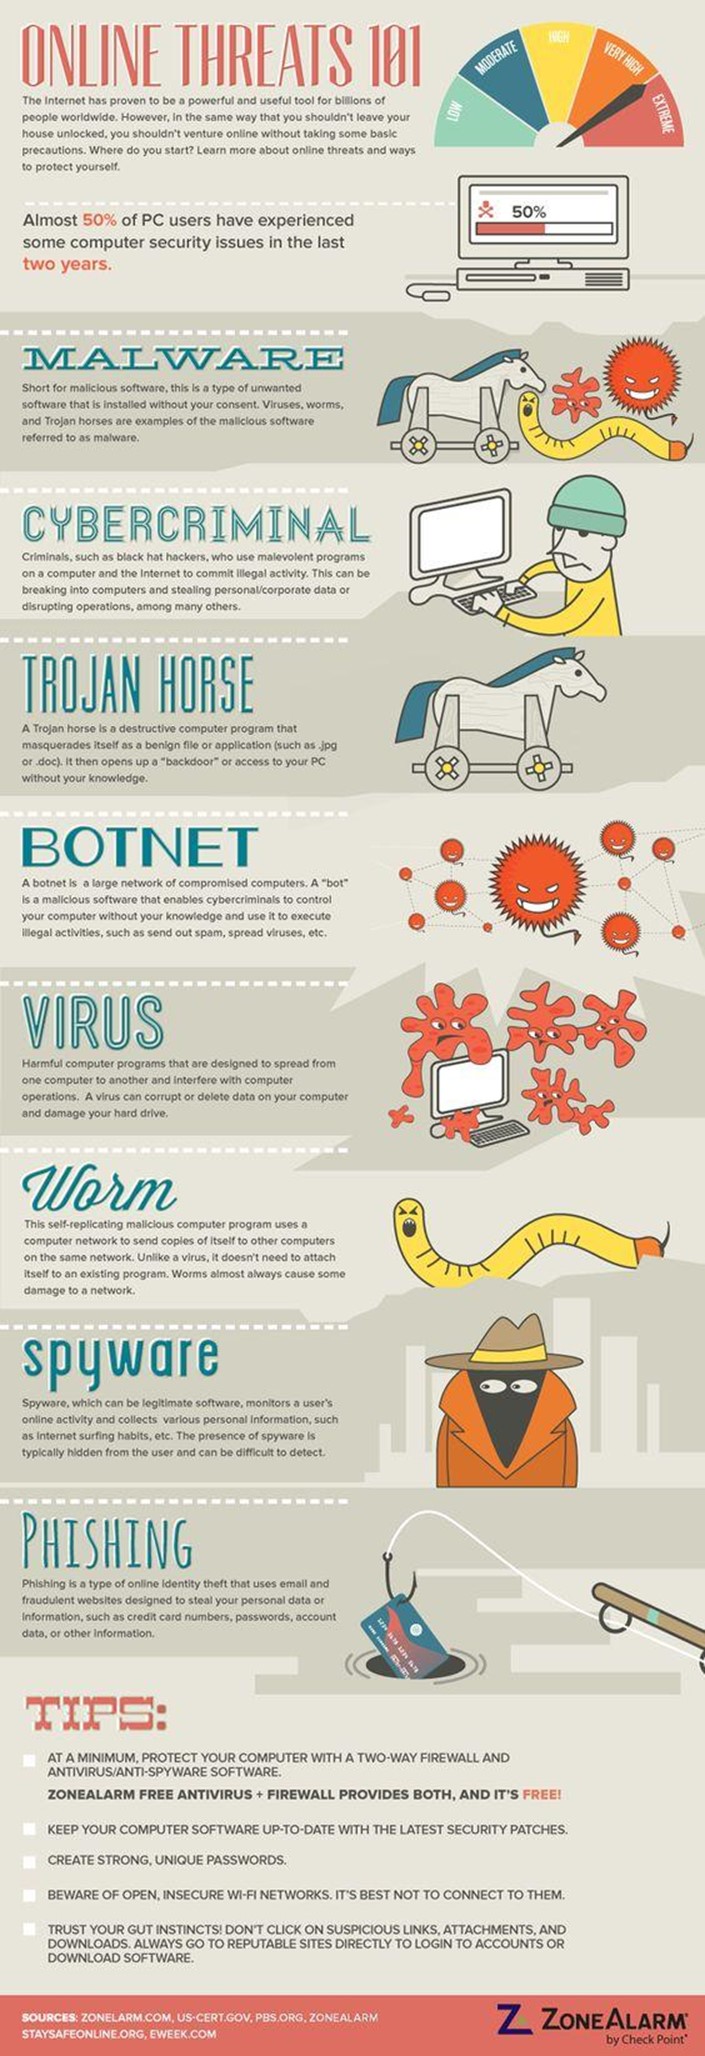 Online Threats 101 - Infographic